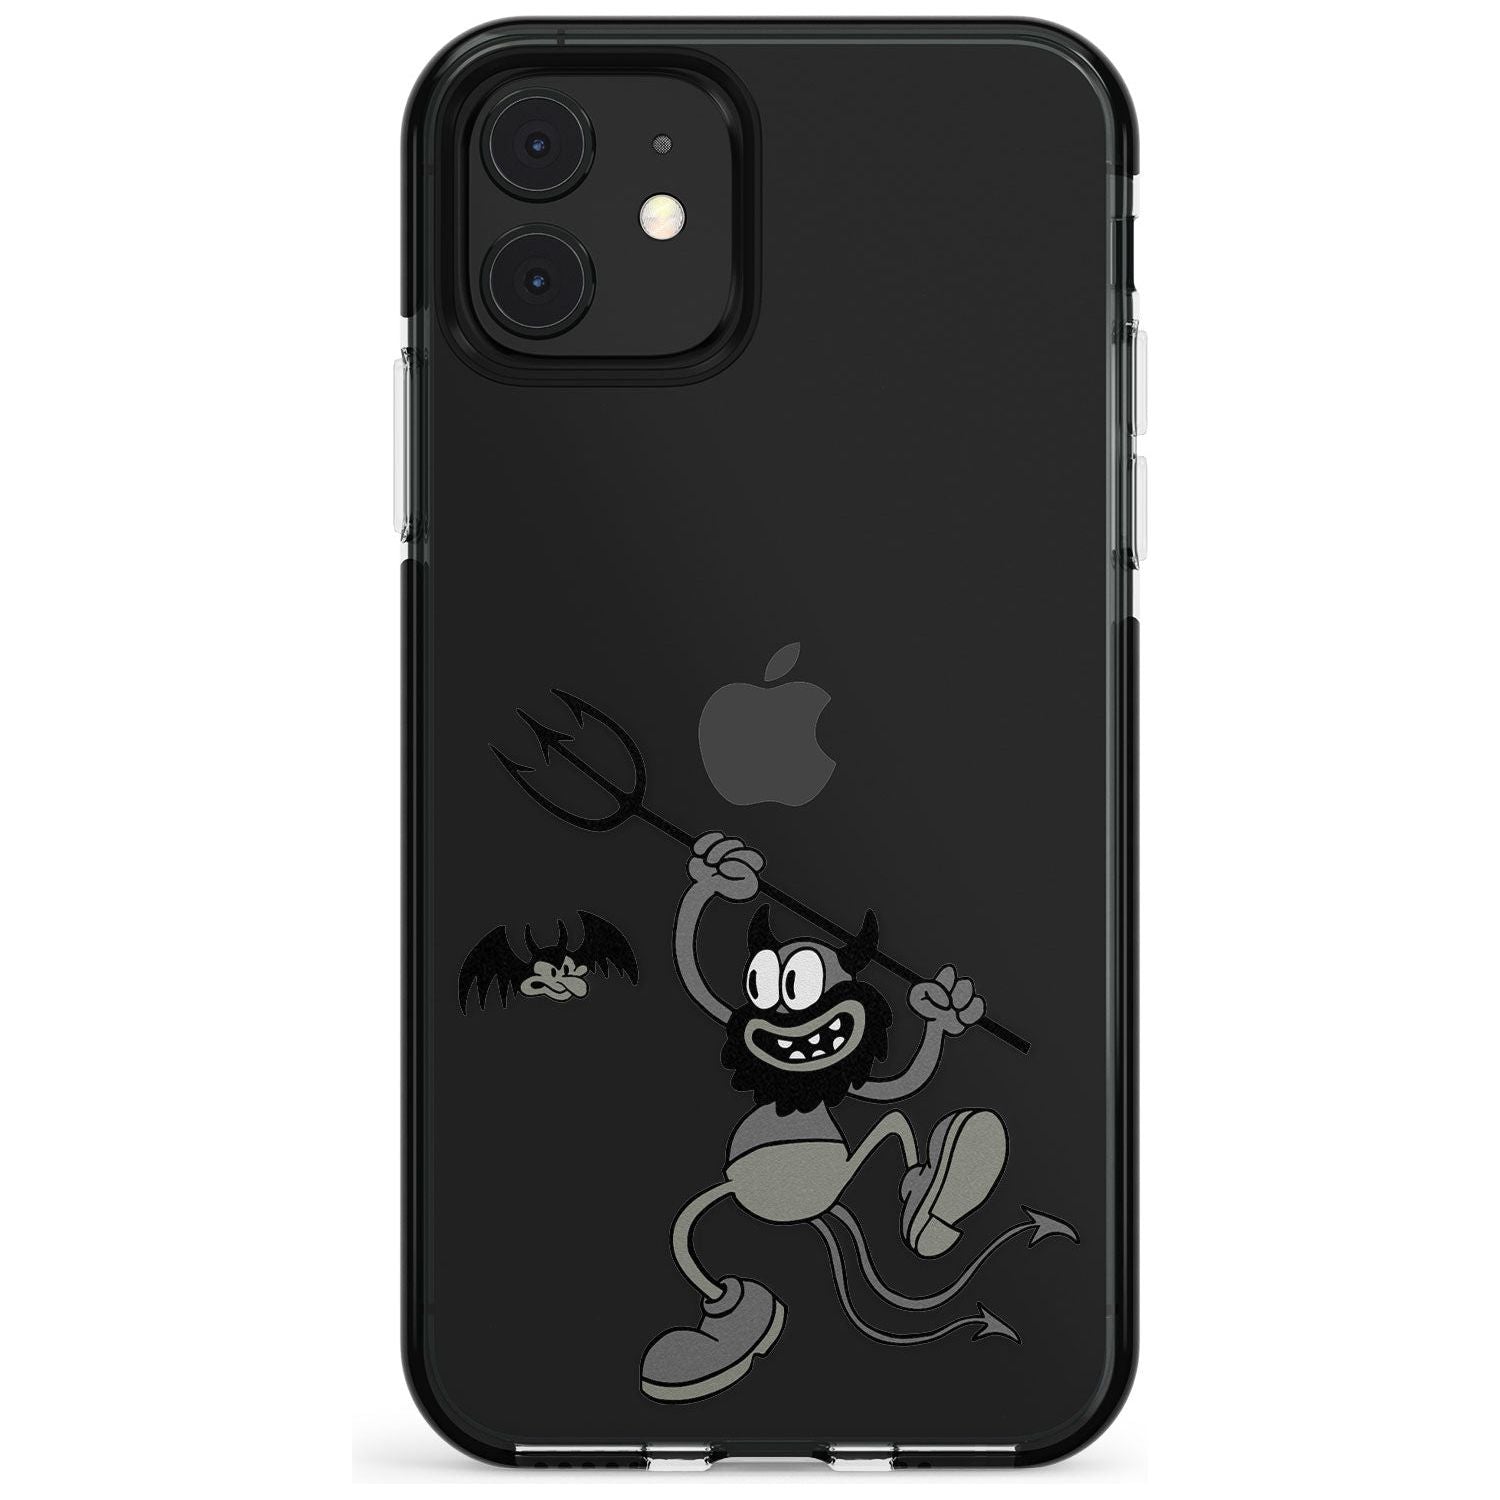 Dancing Devil Black Impact Phone Case for iPhone 11 Pro Max